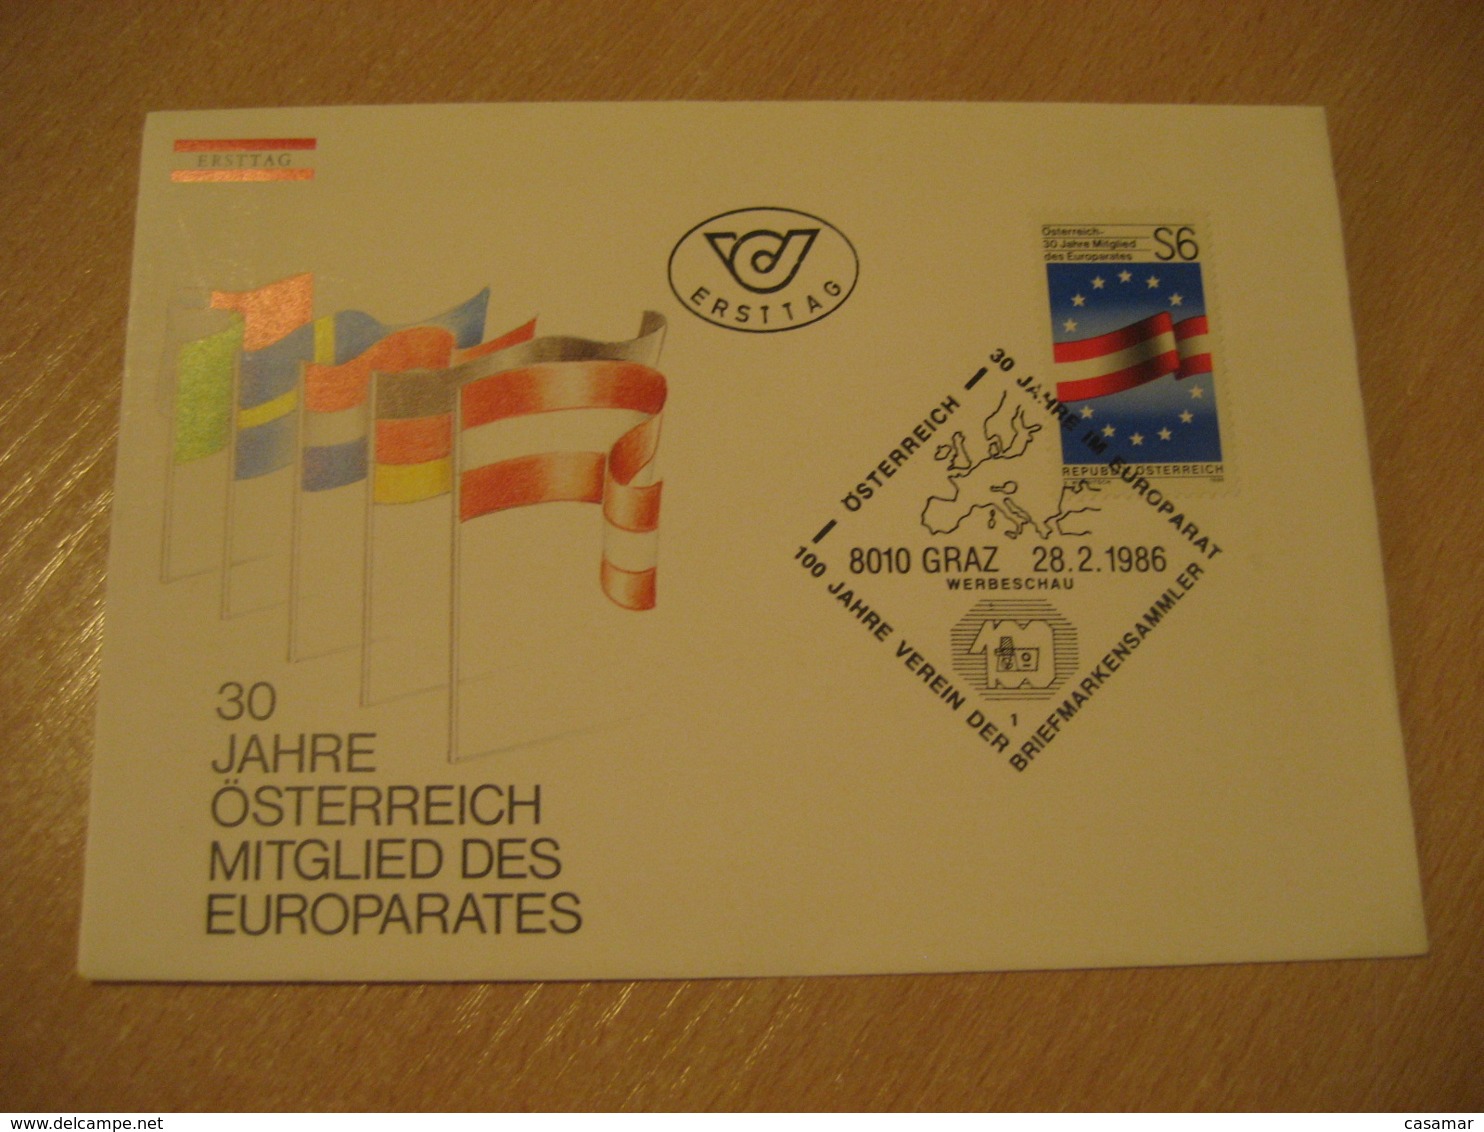 GRAZ 1986 Europa Europeism Flag Flags FDC Cancel Cover AUSTRIA - Briefe